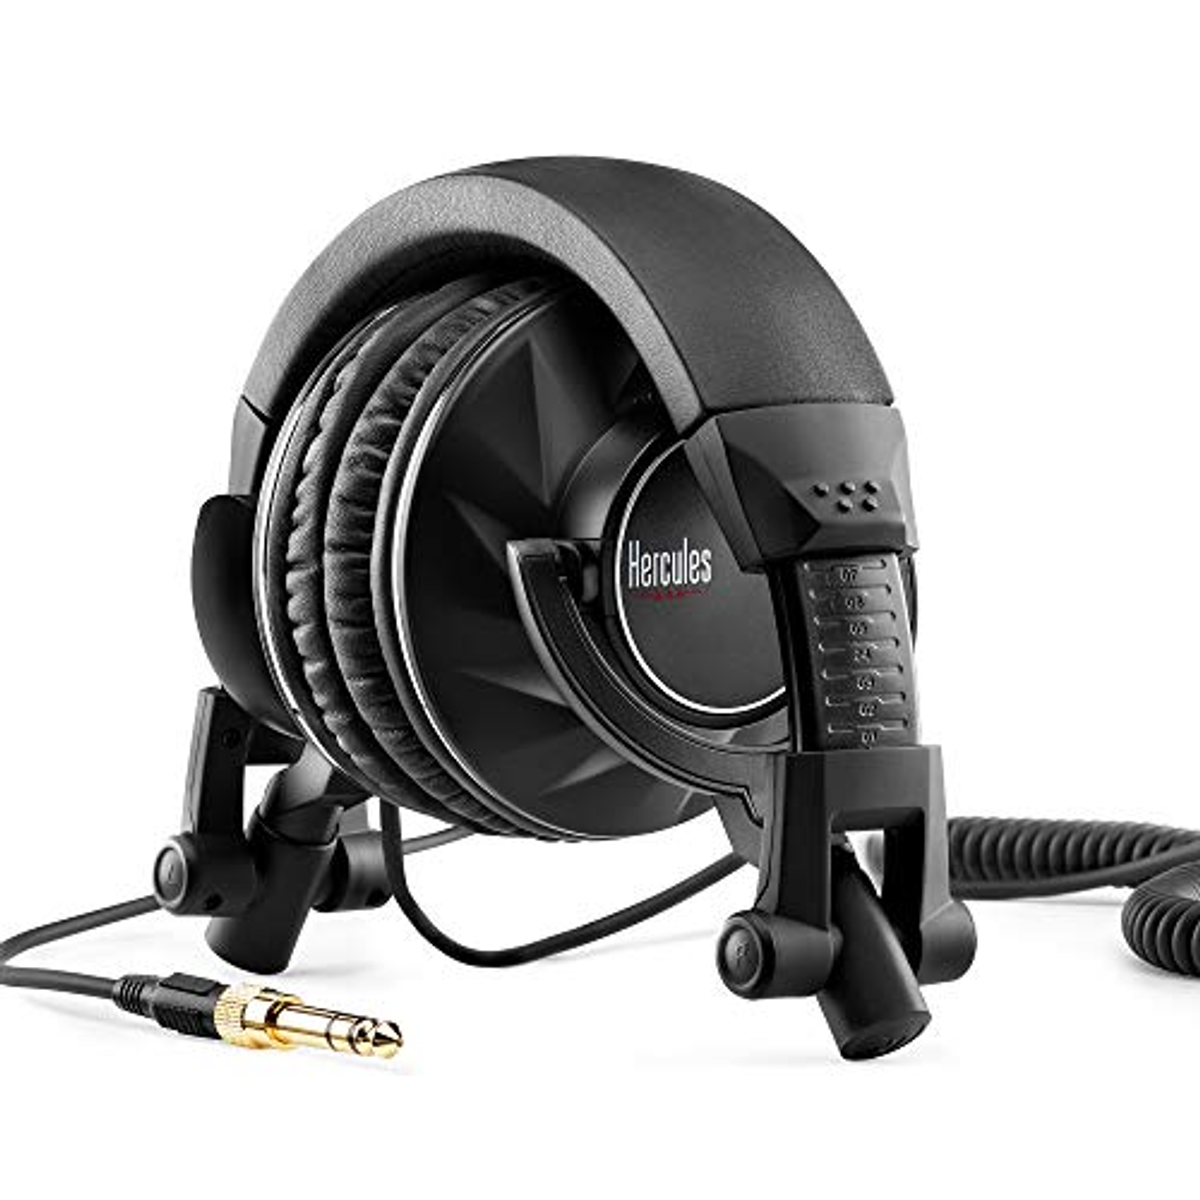 Headphones DJ60, THRUSTMASTER Over-ear HDP Black